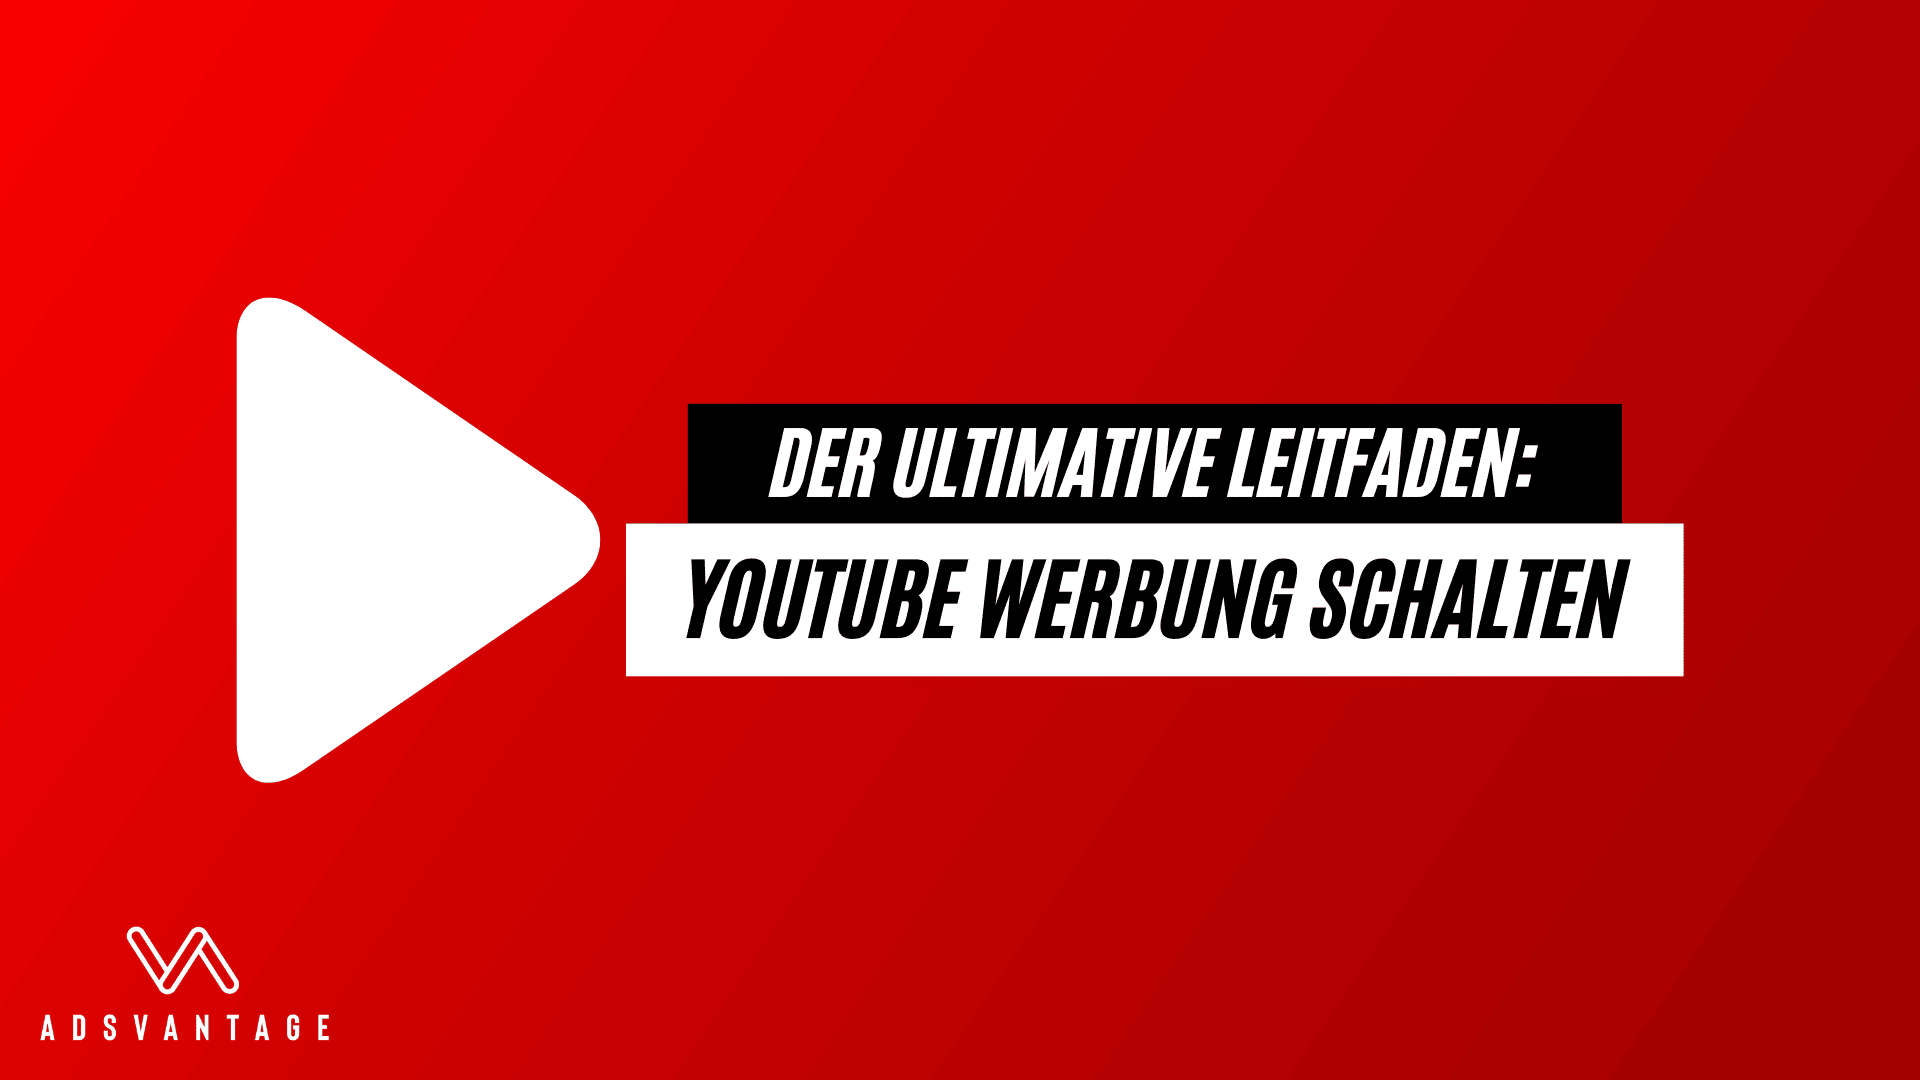 YouTube Werbung schalten: Der ultimative Leitfaden 2023